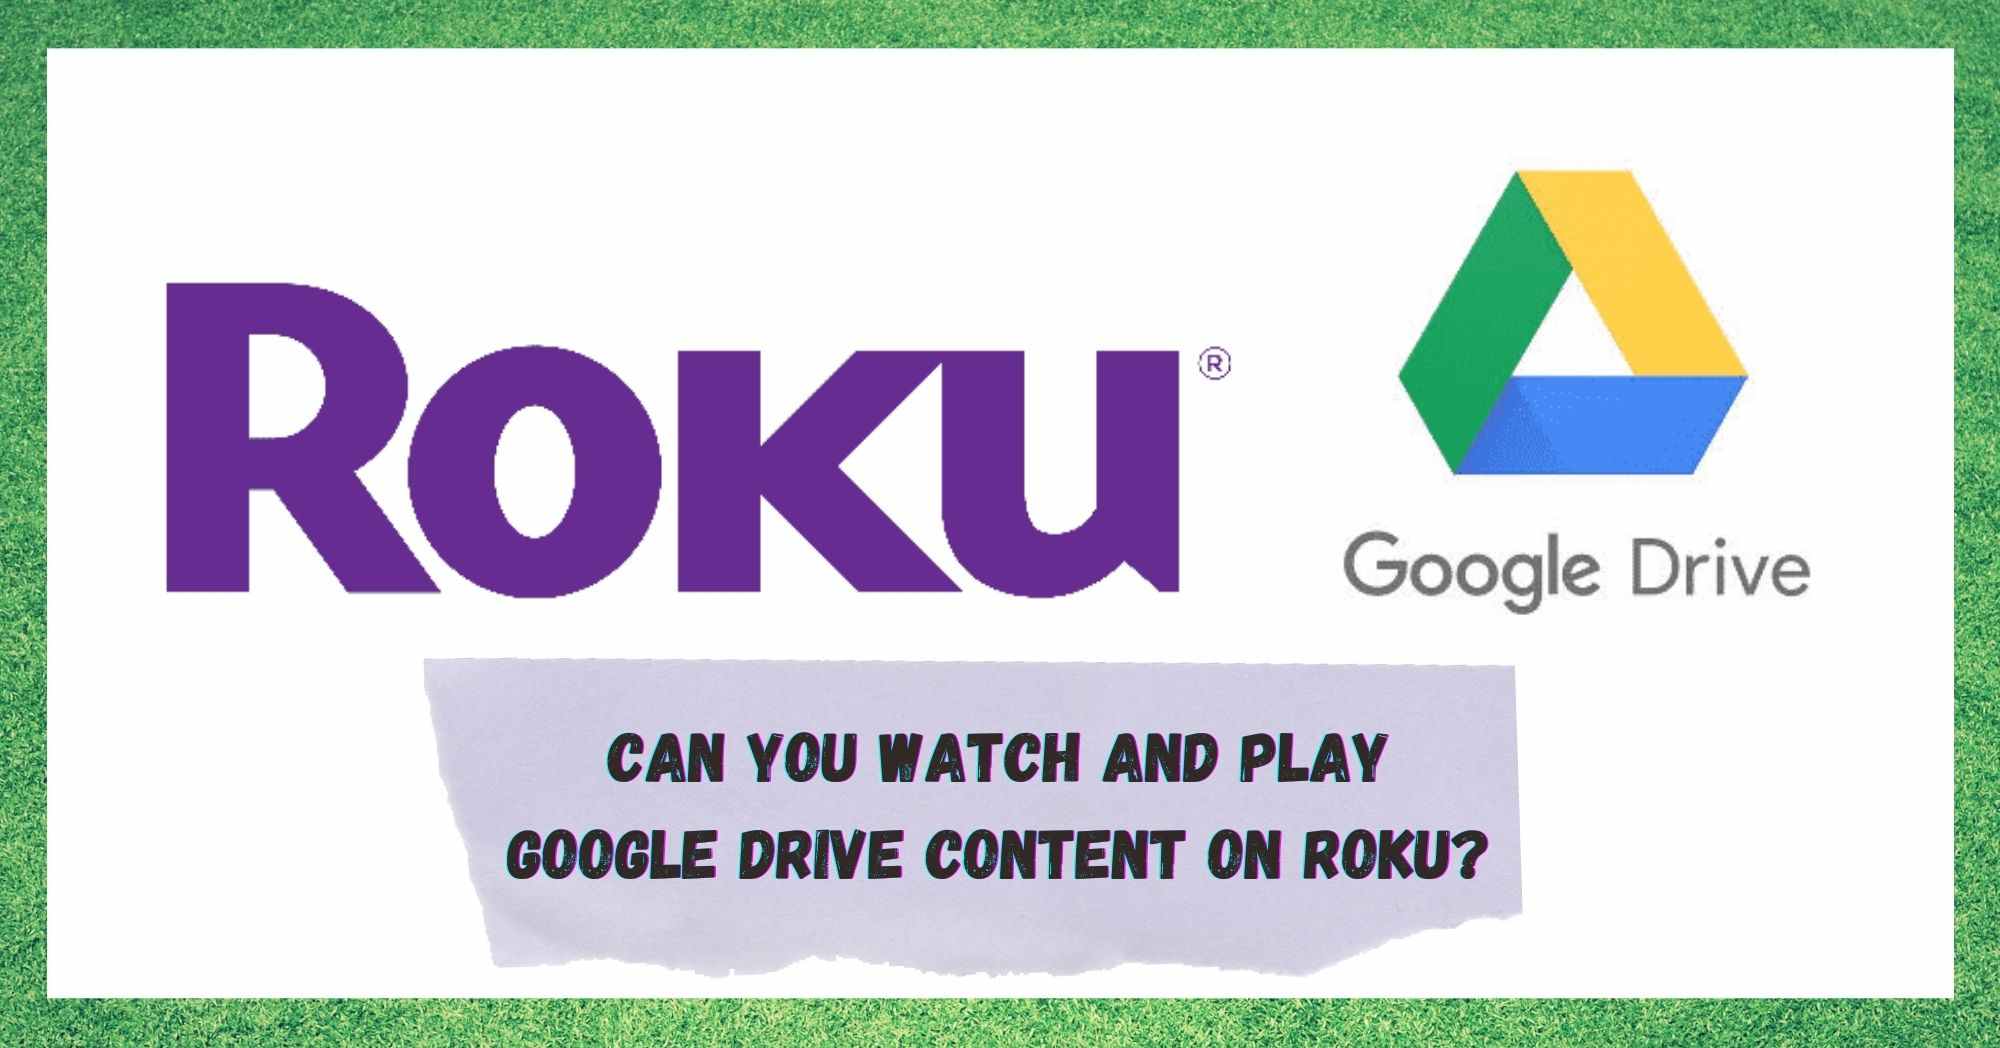 Roku တွင် Google Drive အကြောင်းအရာကို ကြည့်ရှုပြီး ကစားနိုင်ပါသလား။